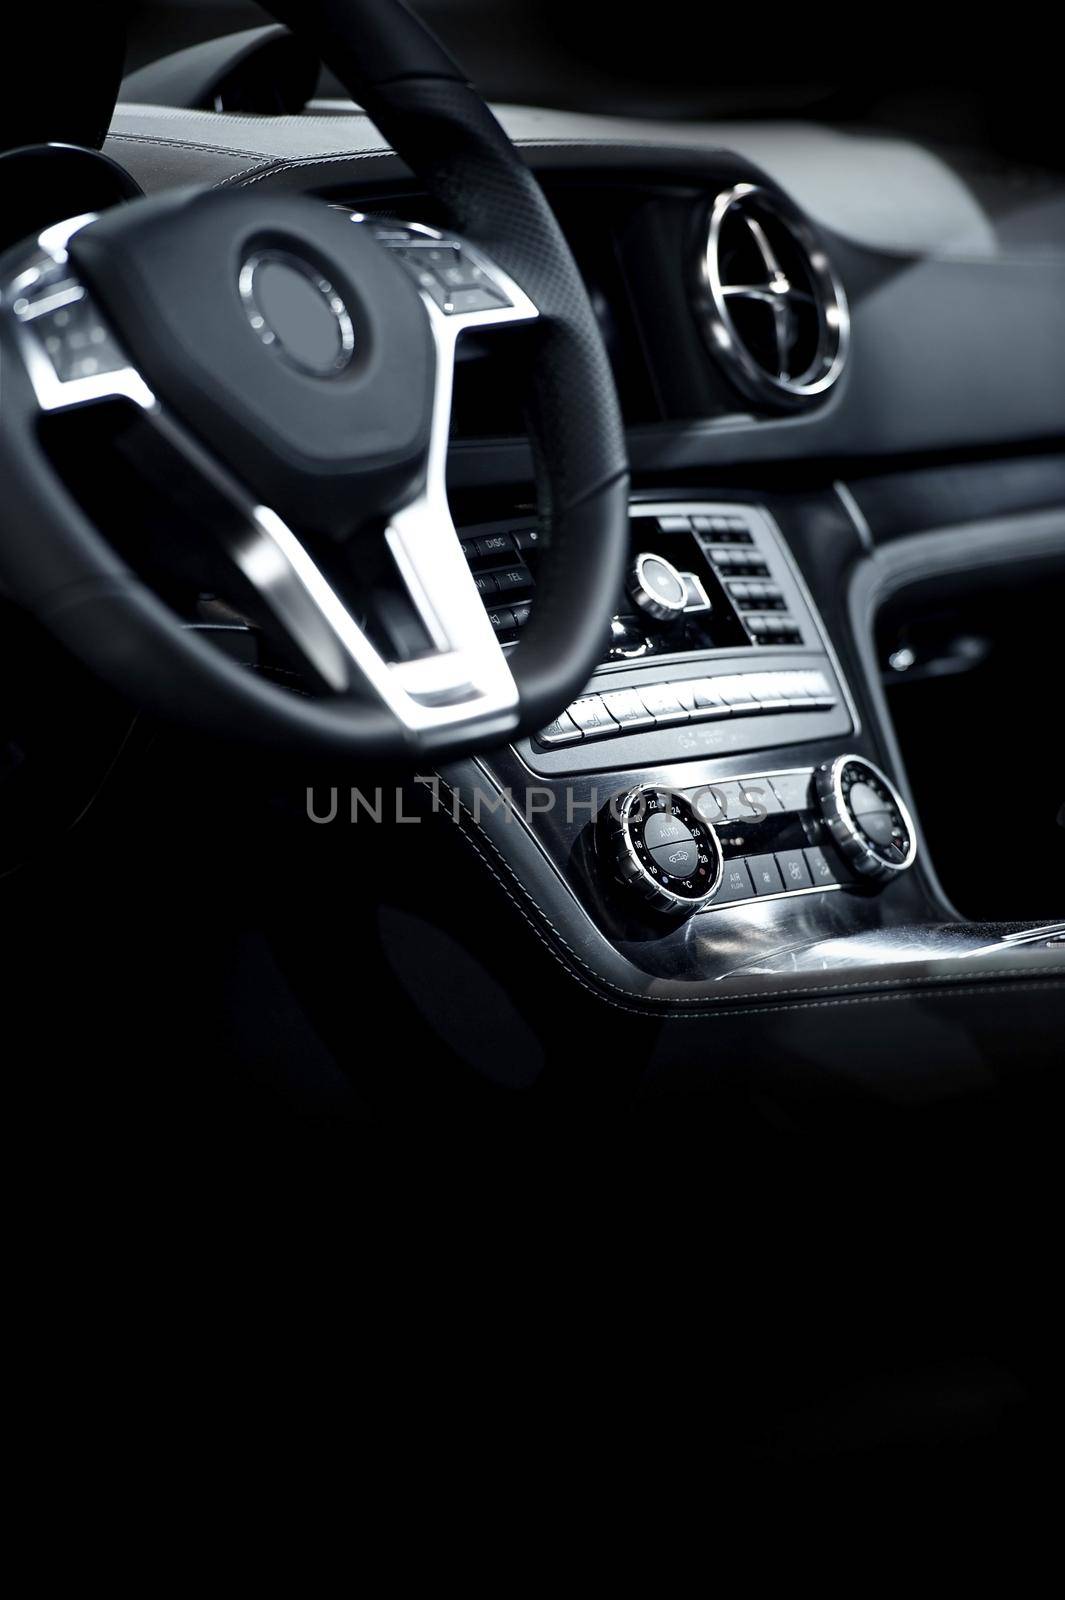 Elegant Modern Car Interior -Dark Leather Interior of Luxury Sport Vehicle. Vertical Photography by welcomia